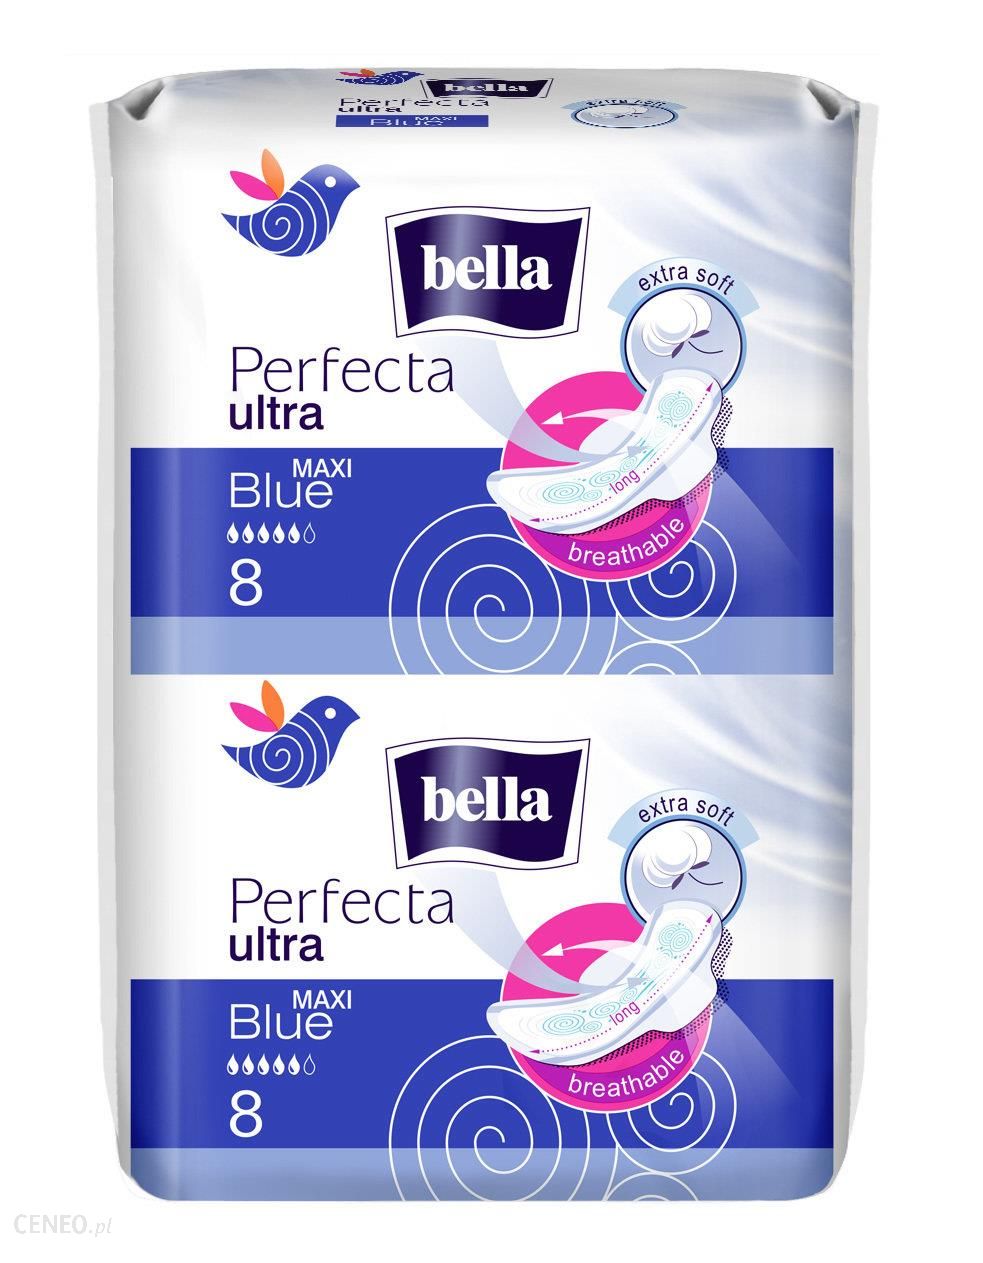 Bella Perfecta Ultra Maxi Blue Duo podpaski higieniczne 16 szt.